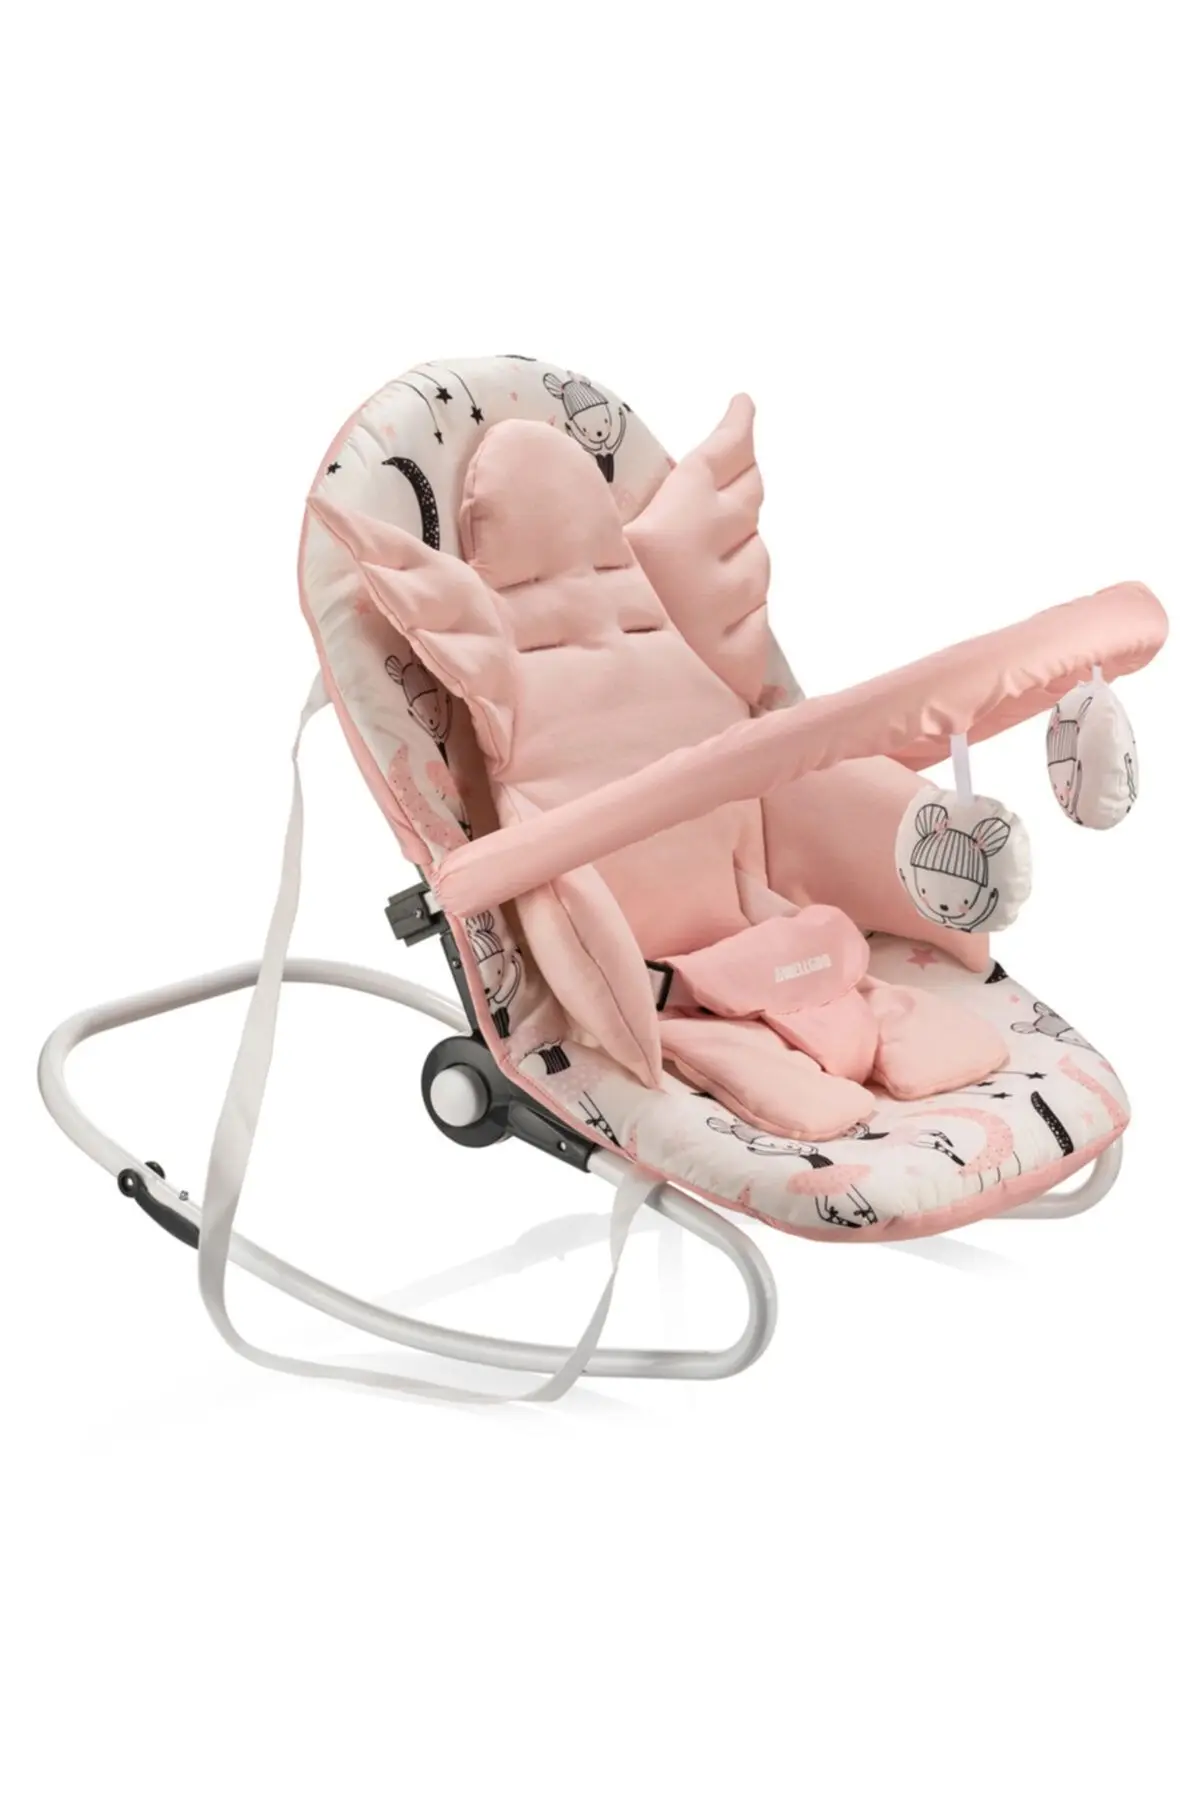 

Angel Natural Baby Sleeping Bed Baby Cradle Rocking Chair Swing Soothing Crib Newborn Nursery, Mother Lap Baby, baby Crib Sleep